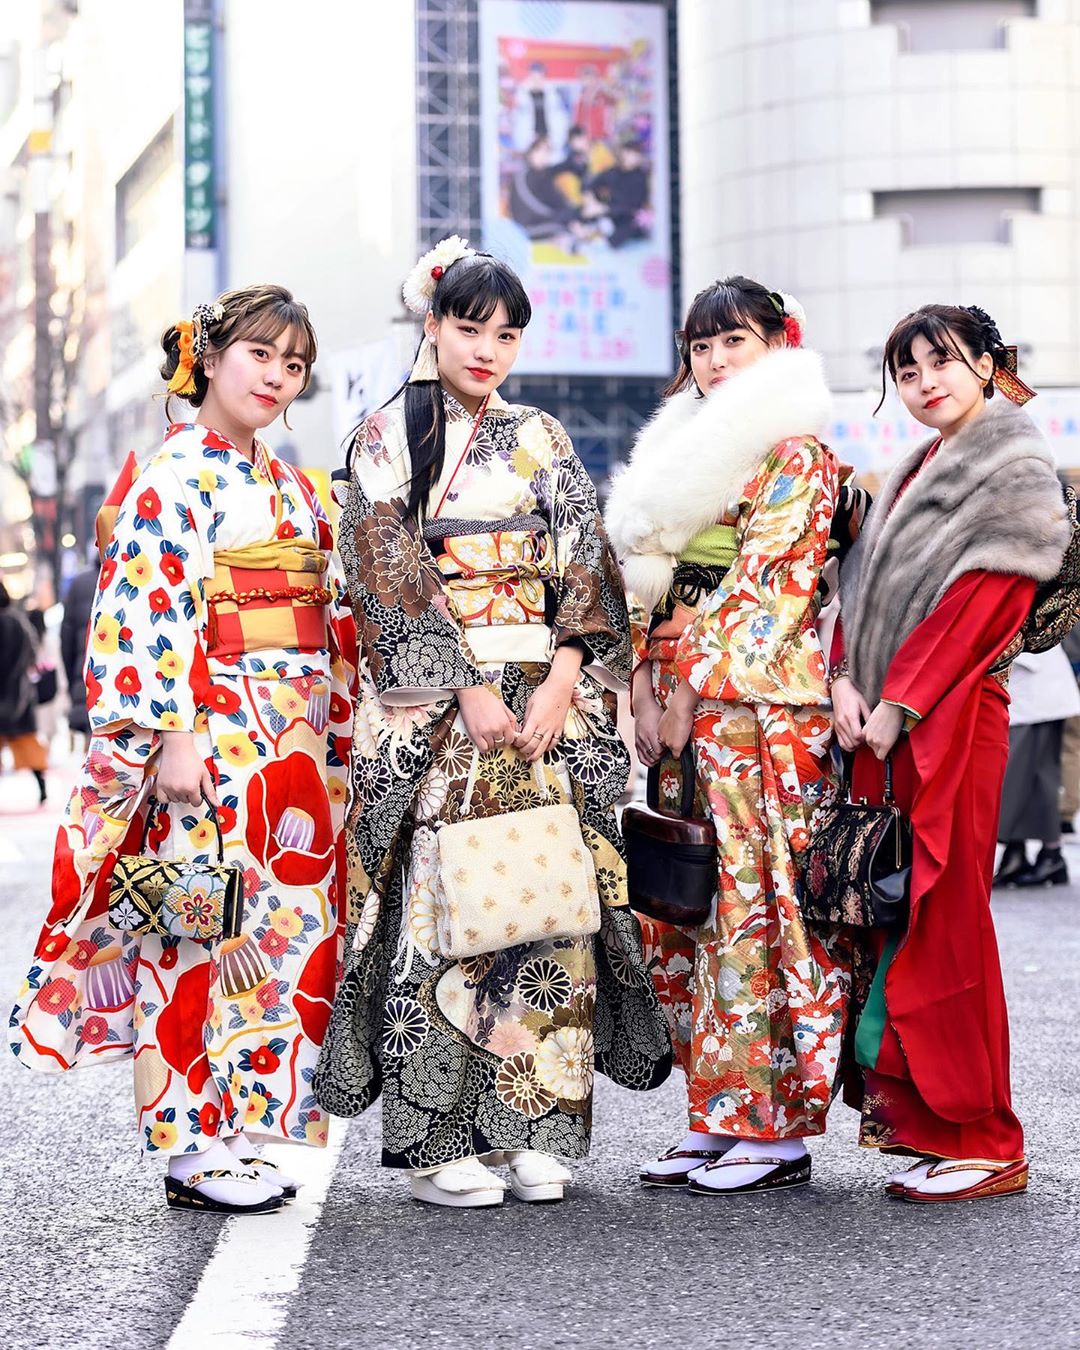 Tokyo Fashion Traditional Japanese furisode kimono on the streets of